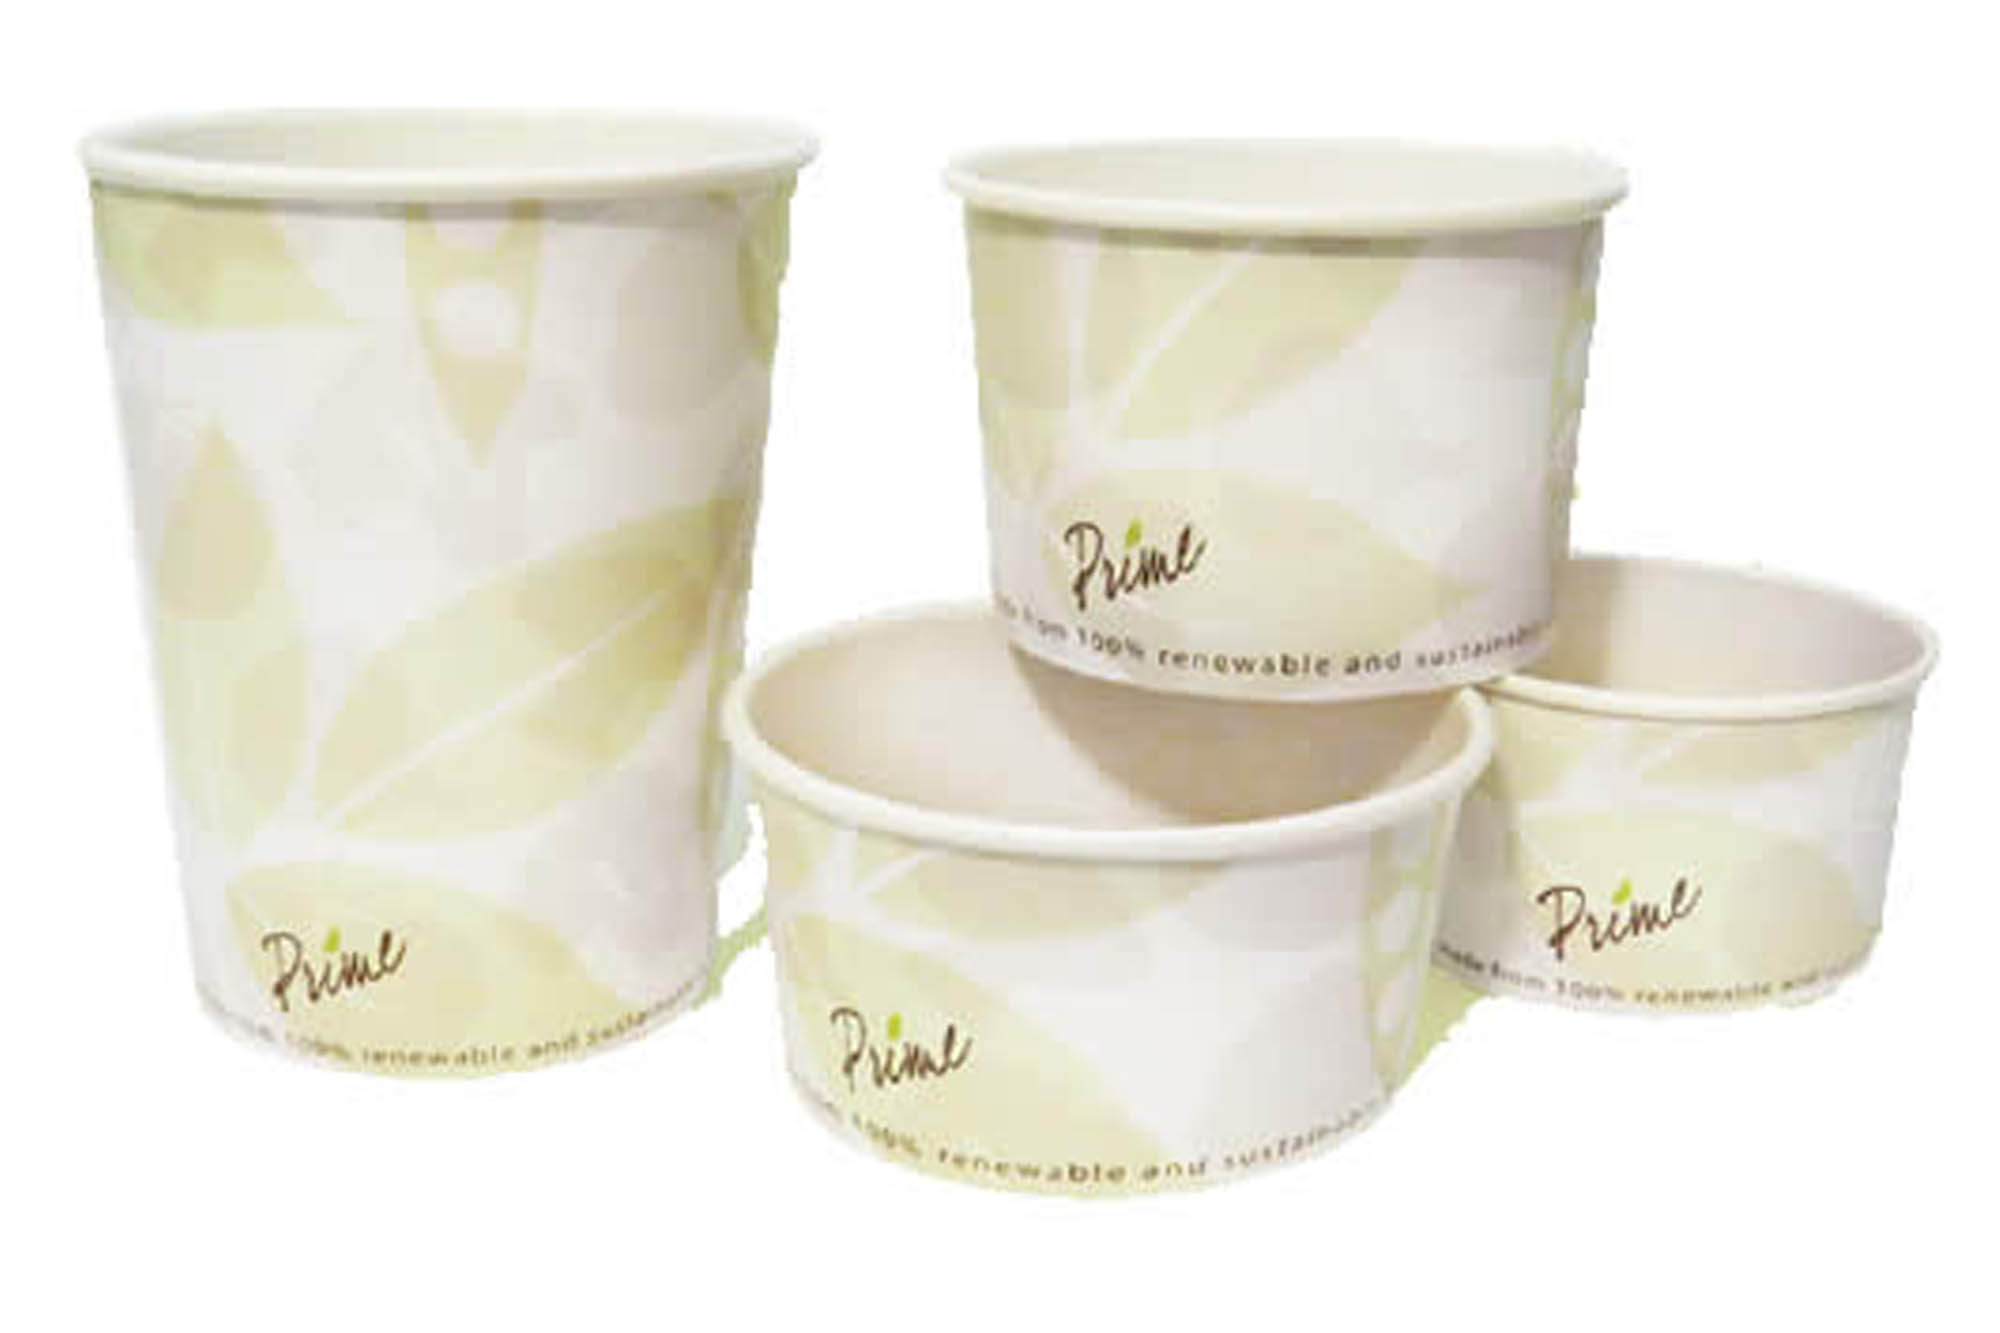 Edenware compostable cups